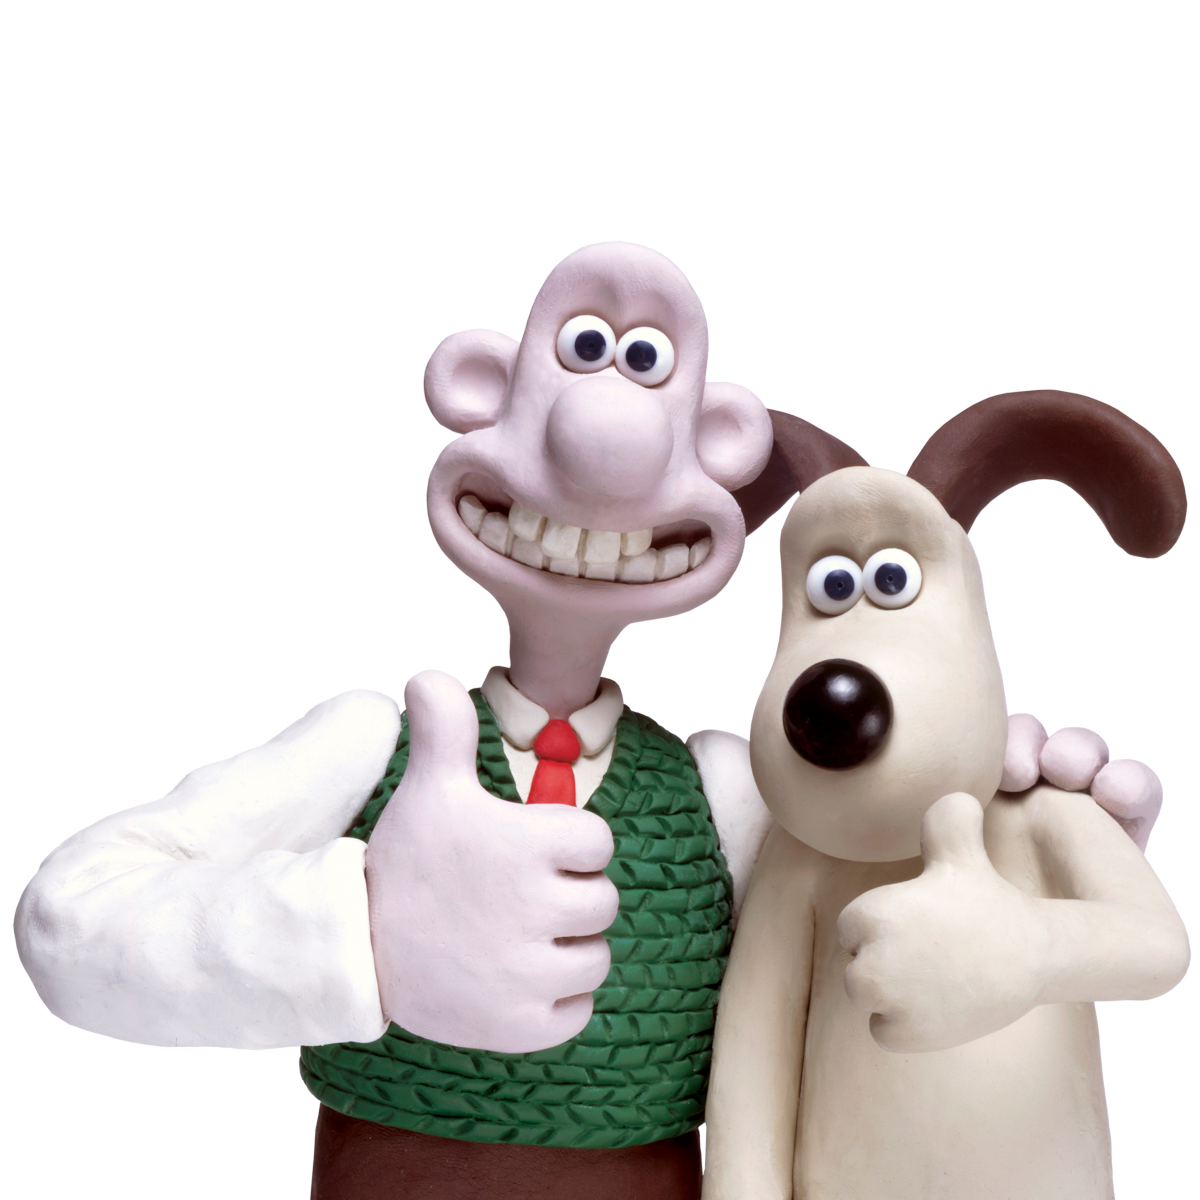 WDR mediagroup übernimmt ab sofort Vermarktungsrechte für Kultmarke "Wallace & Gromit"